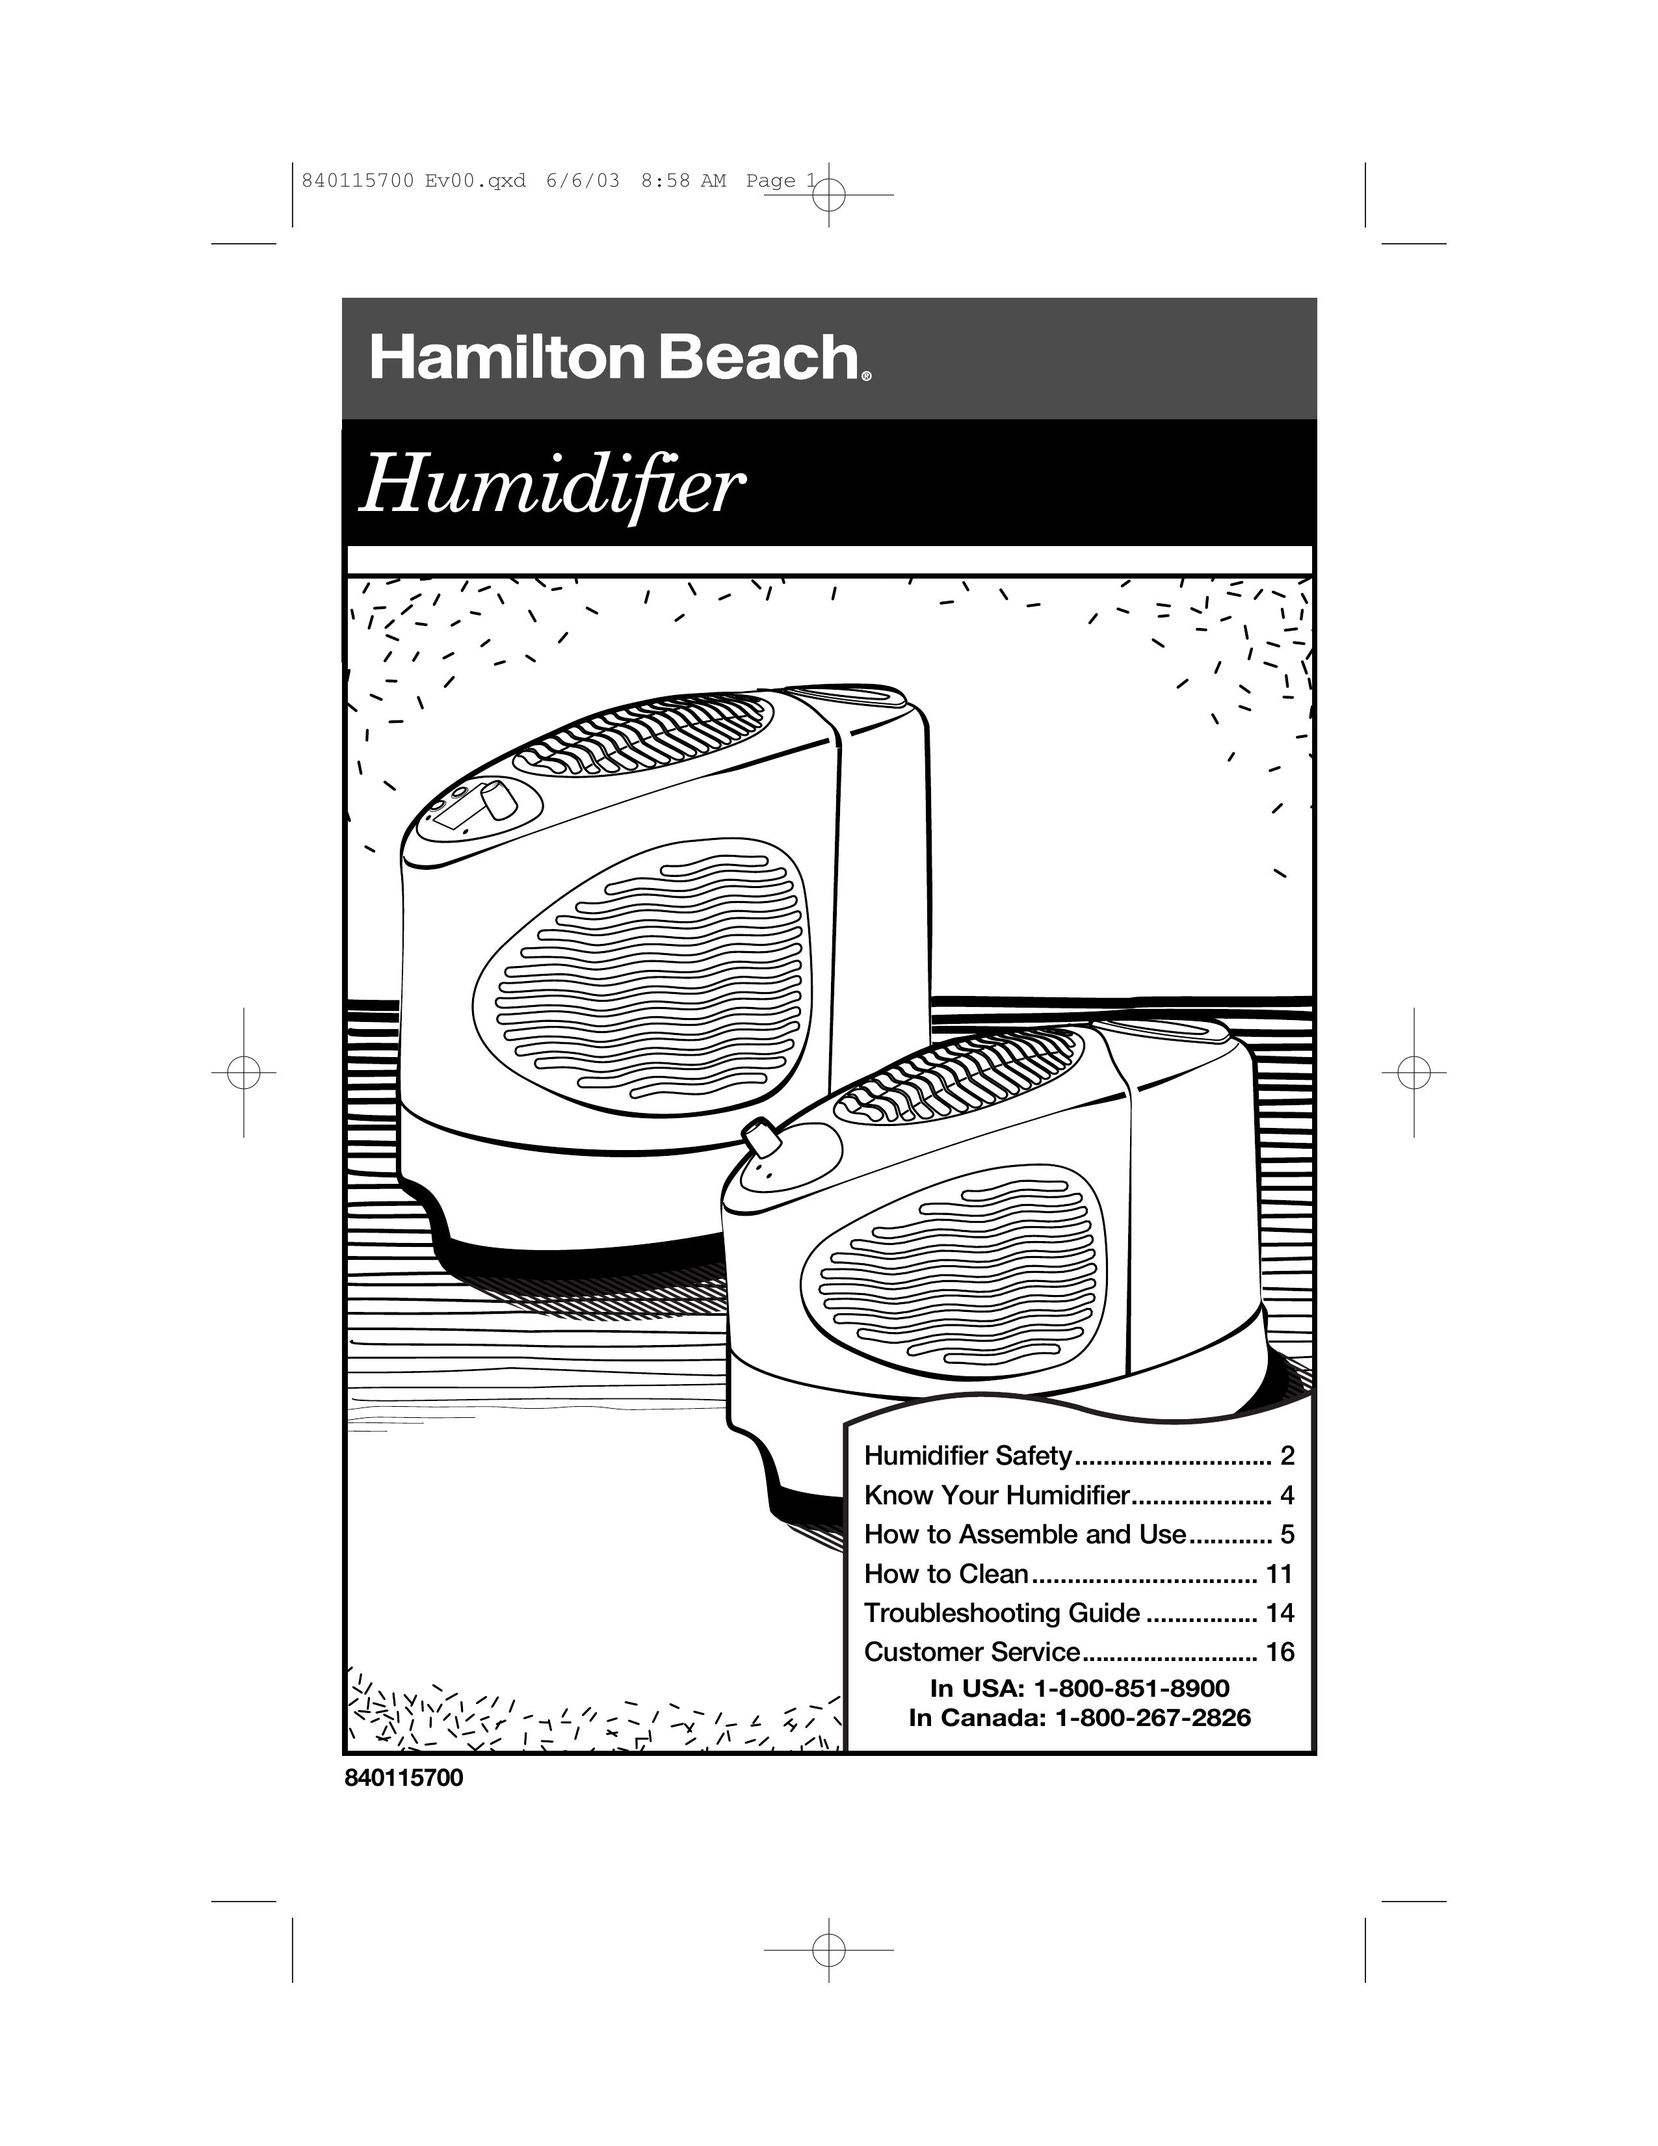 Hamilton Beach 05920 Humidifier User Manual